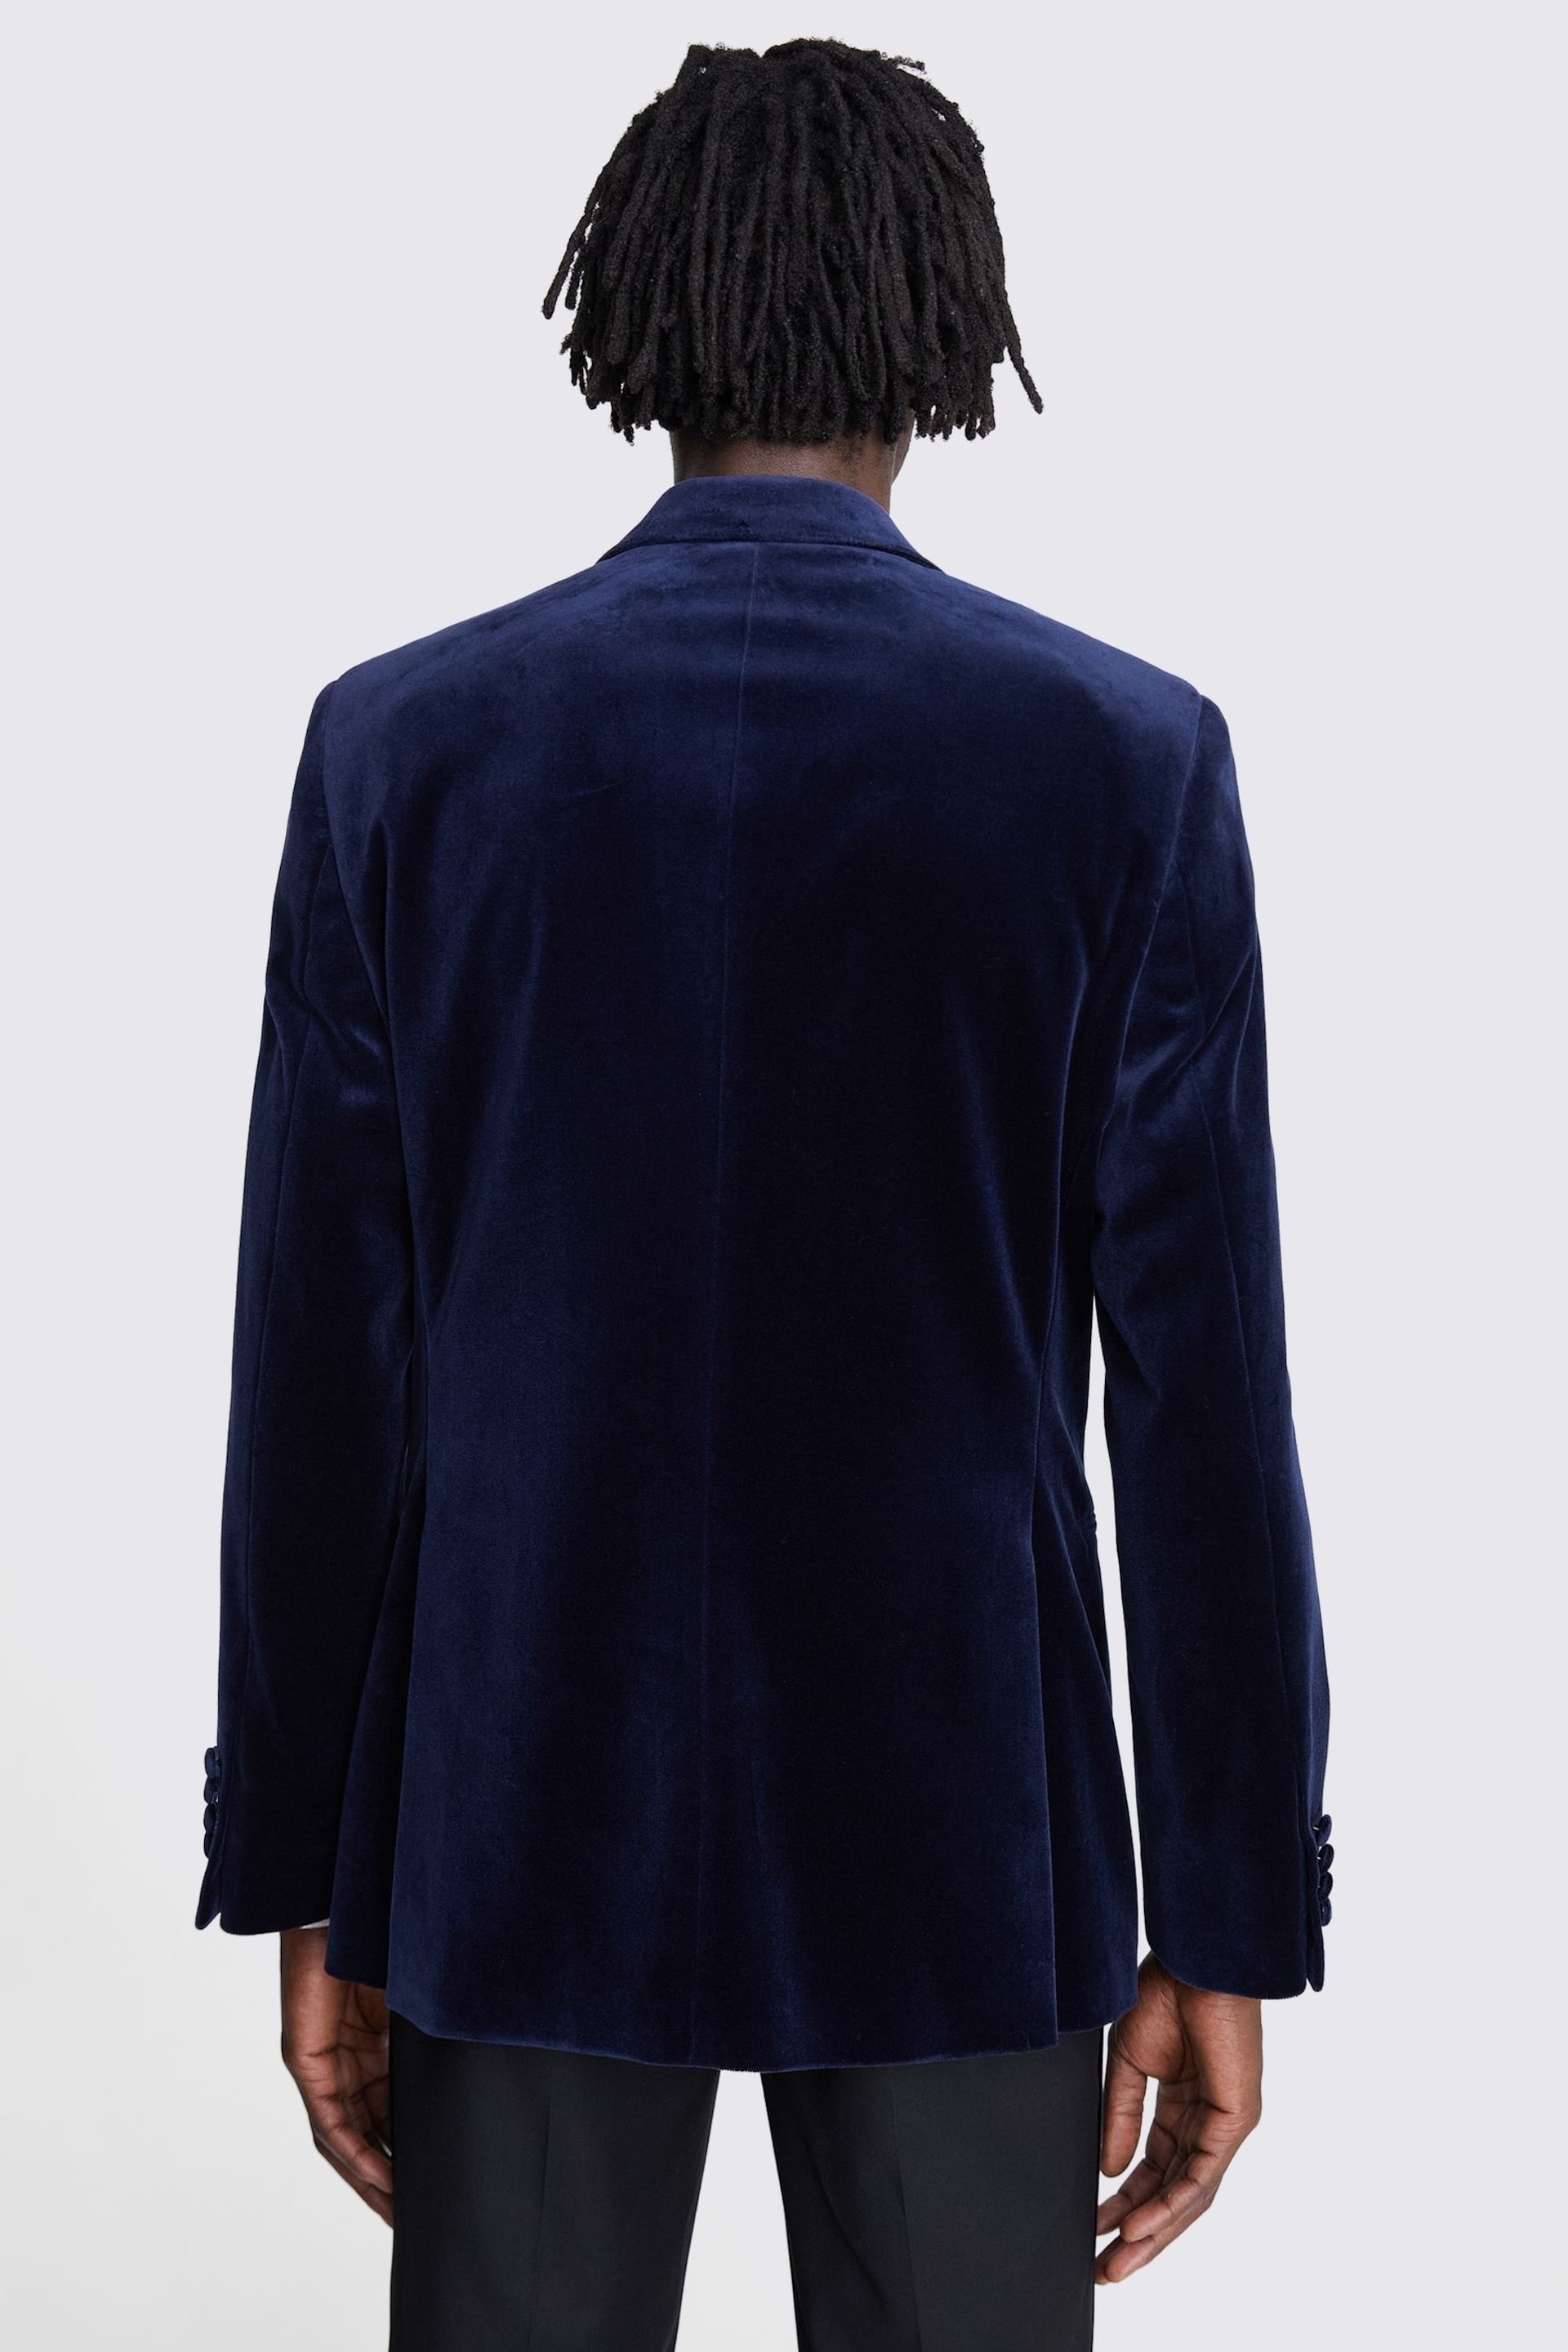 MOSS Blue Tailored Fit Velvet Jacket - Image 3 of 5